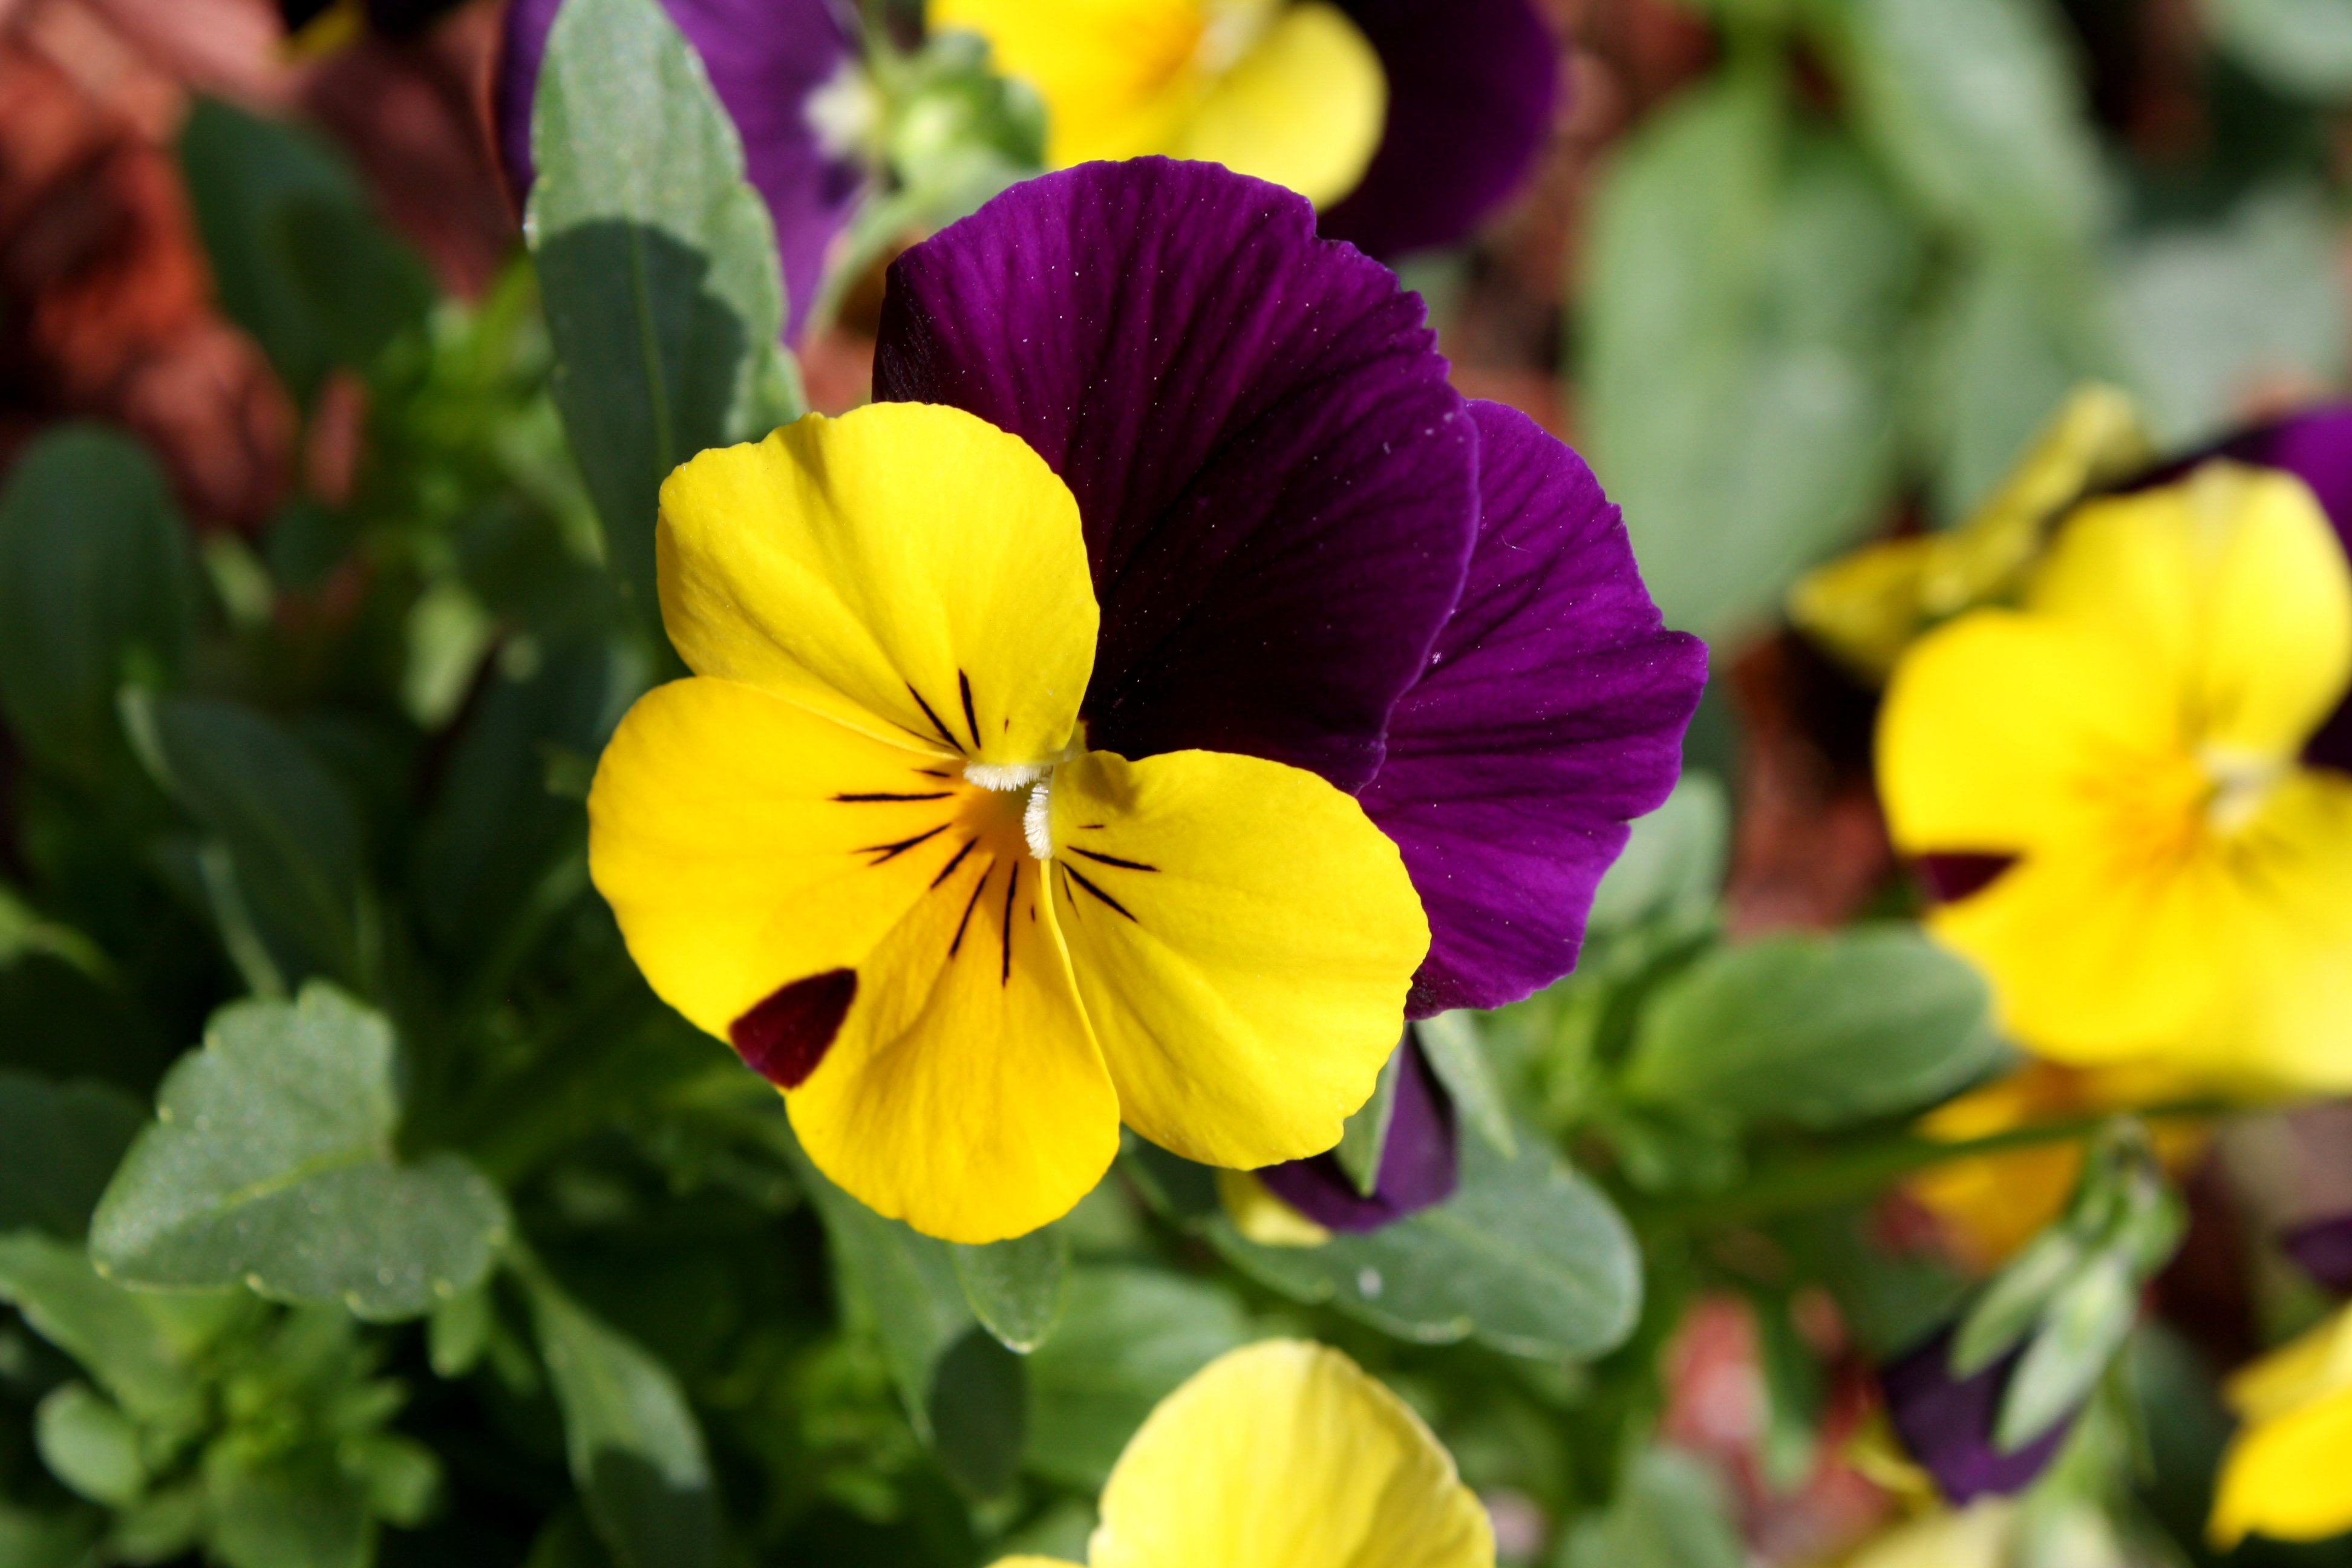 Viola_tricolor_pansy_flower_close_up